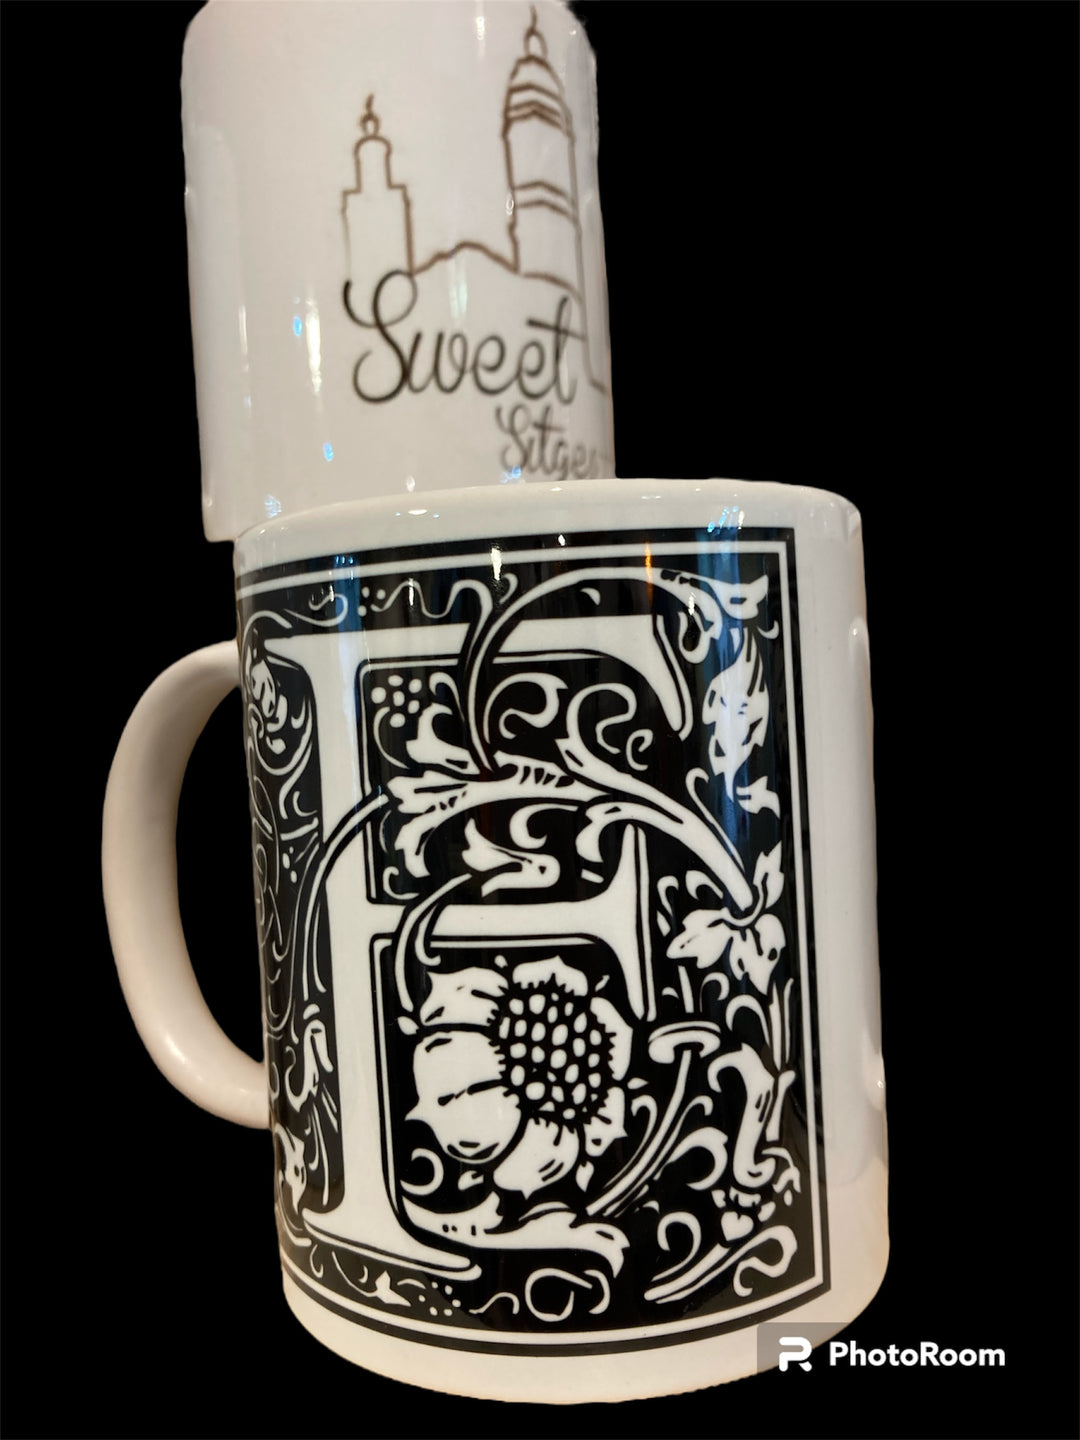 Sweet Sitges Alphabet Coffee Mug